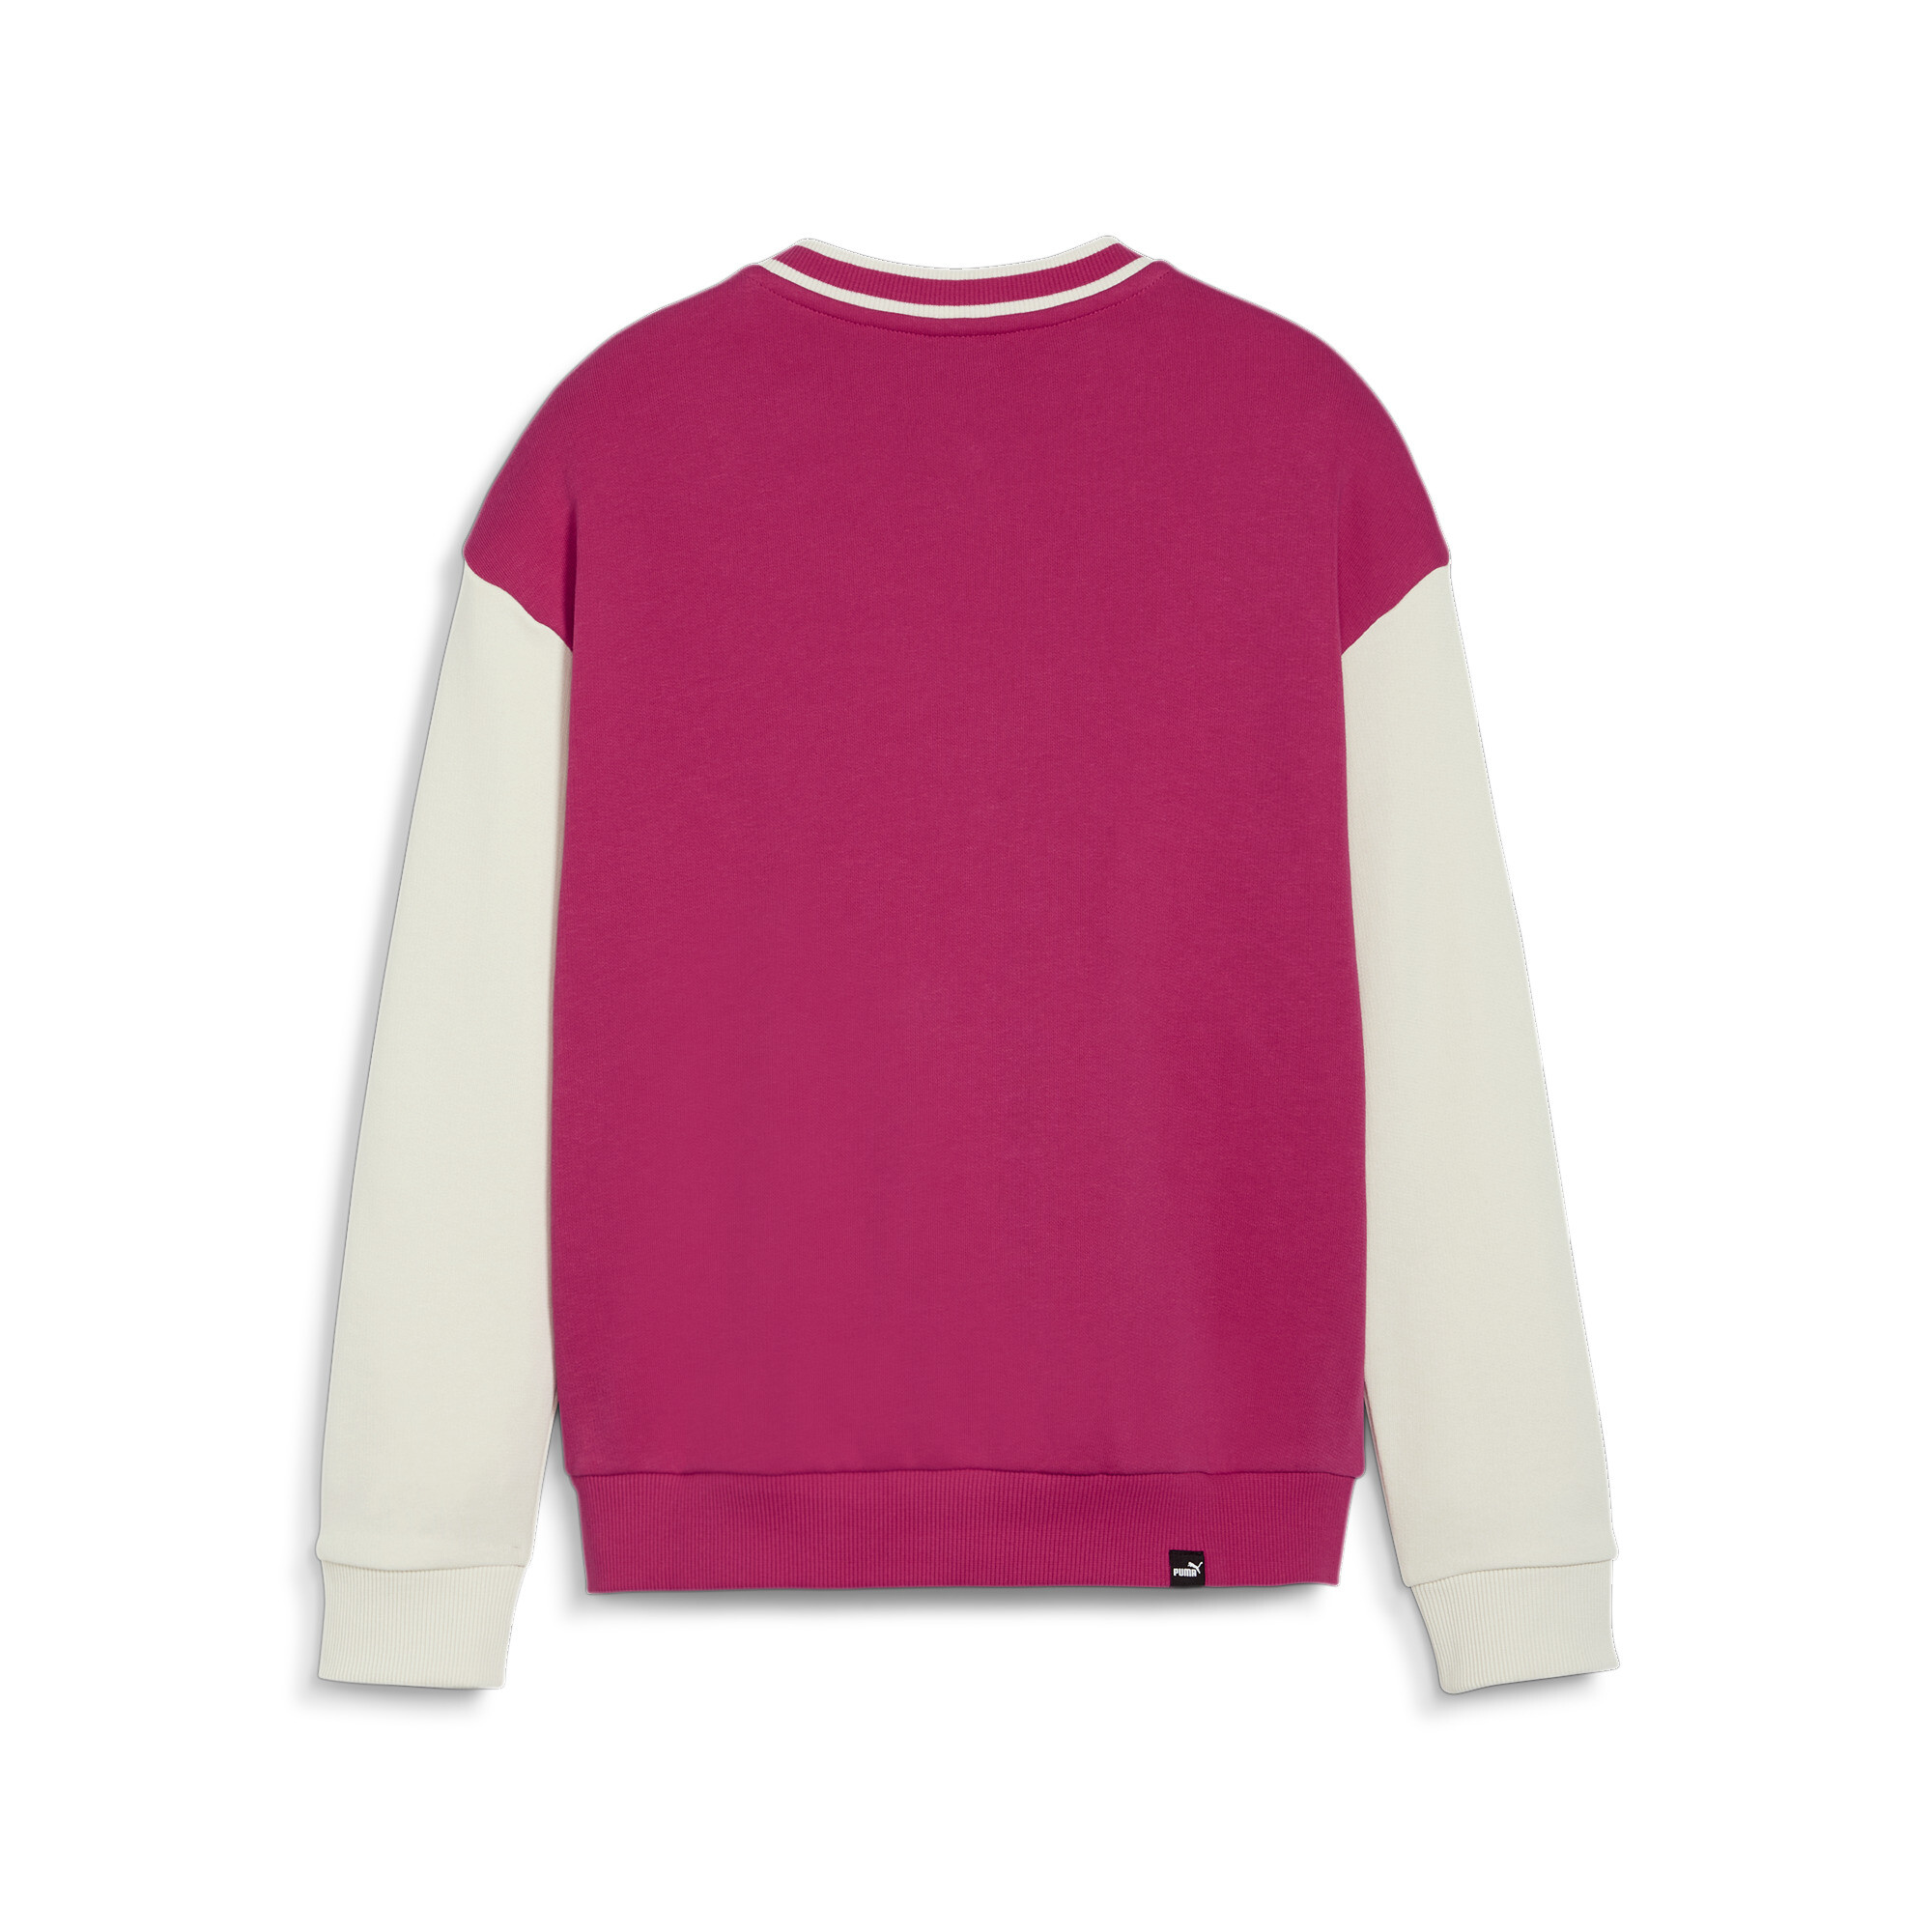 Women's Puma SQUAD Youth Jacket, Pink, Size 11-12Y, Clothing